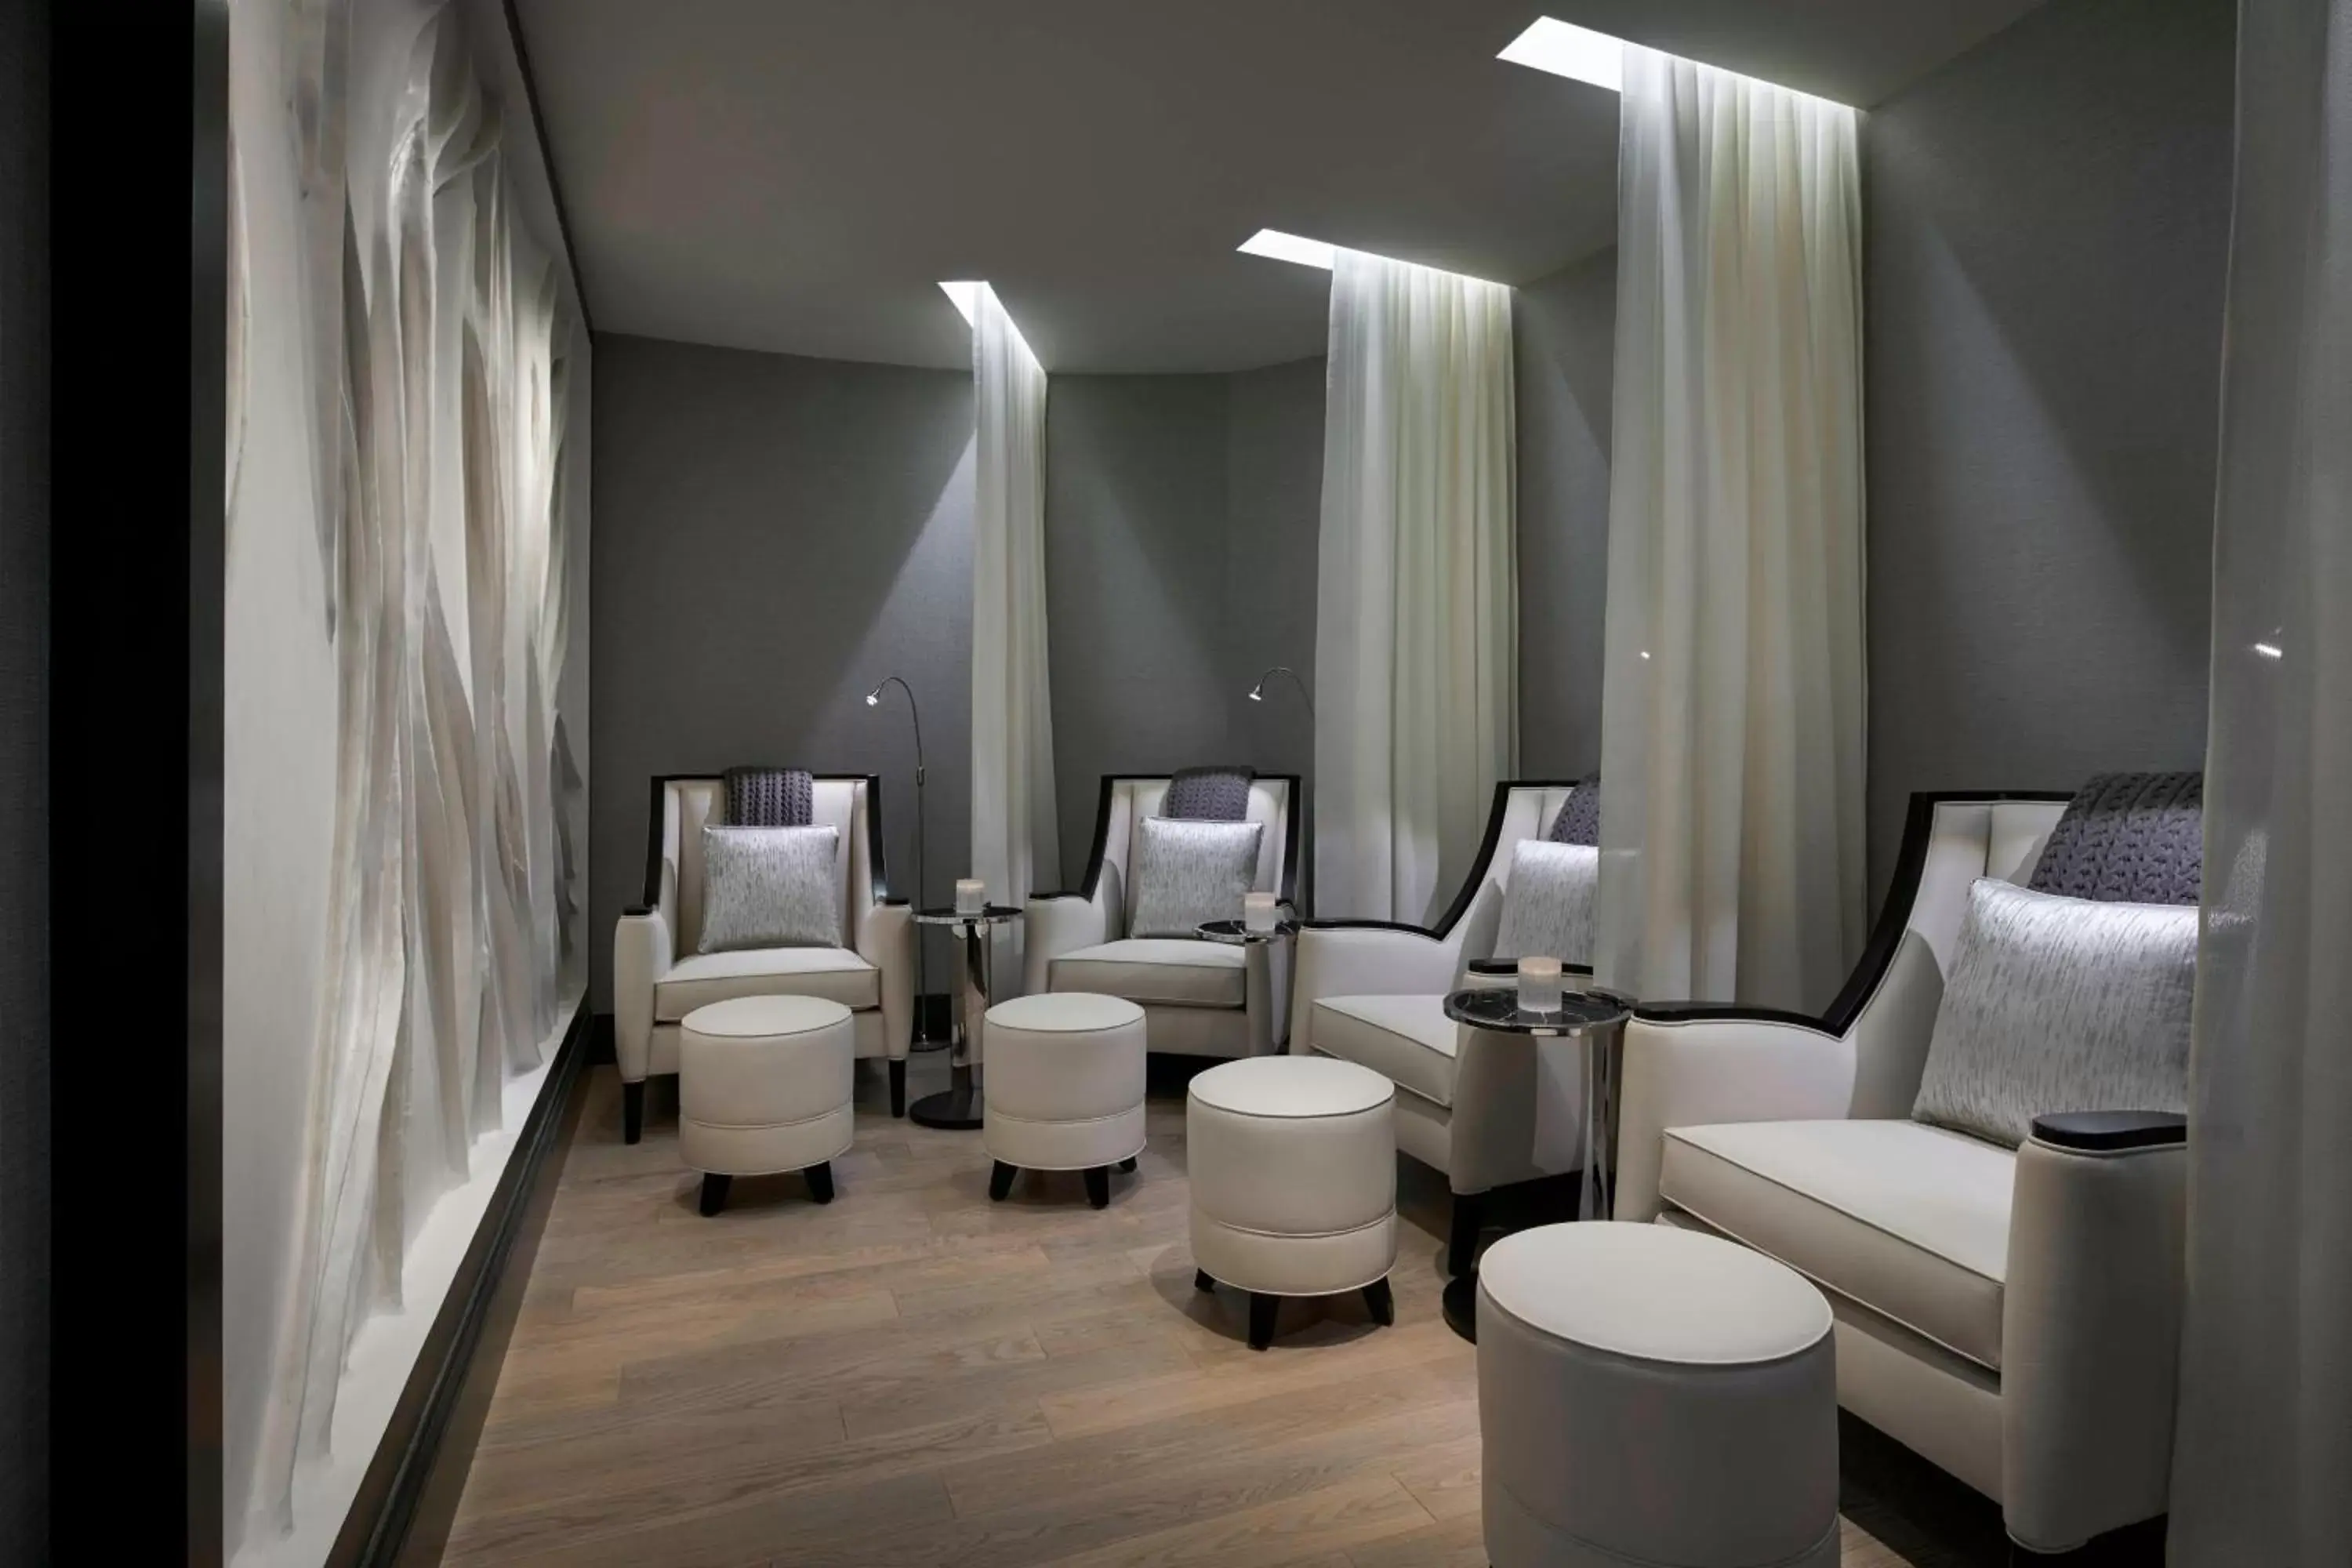 Spa and wellness centre/facilities, Bathroom in The Ritz-Carlton Georgetown, Washington, D.C.